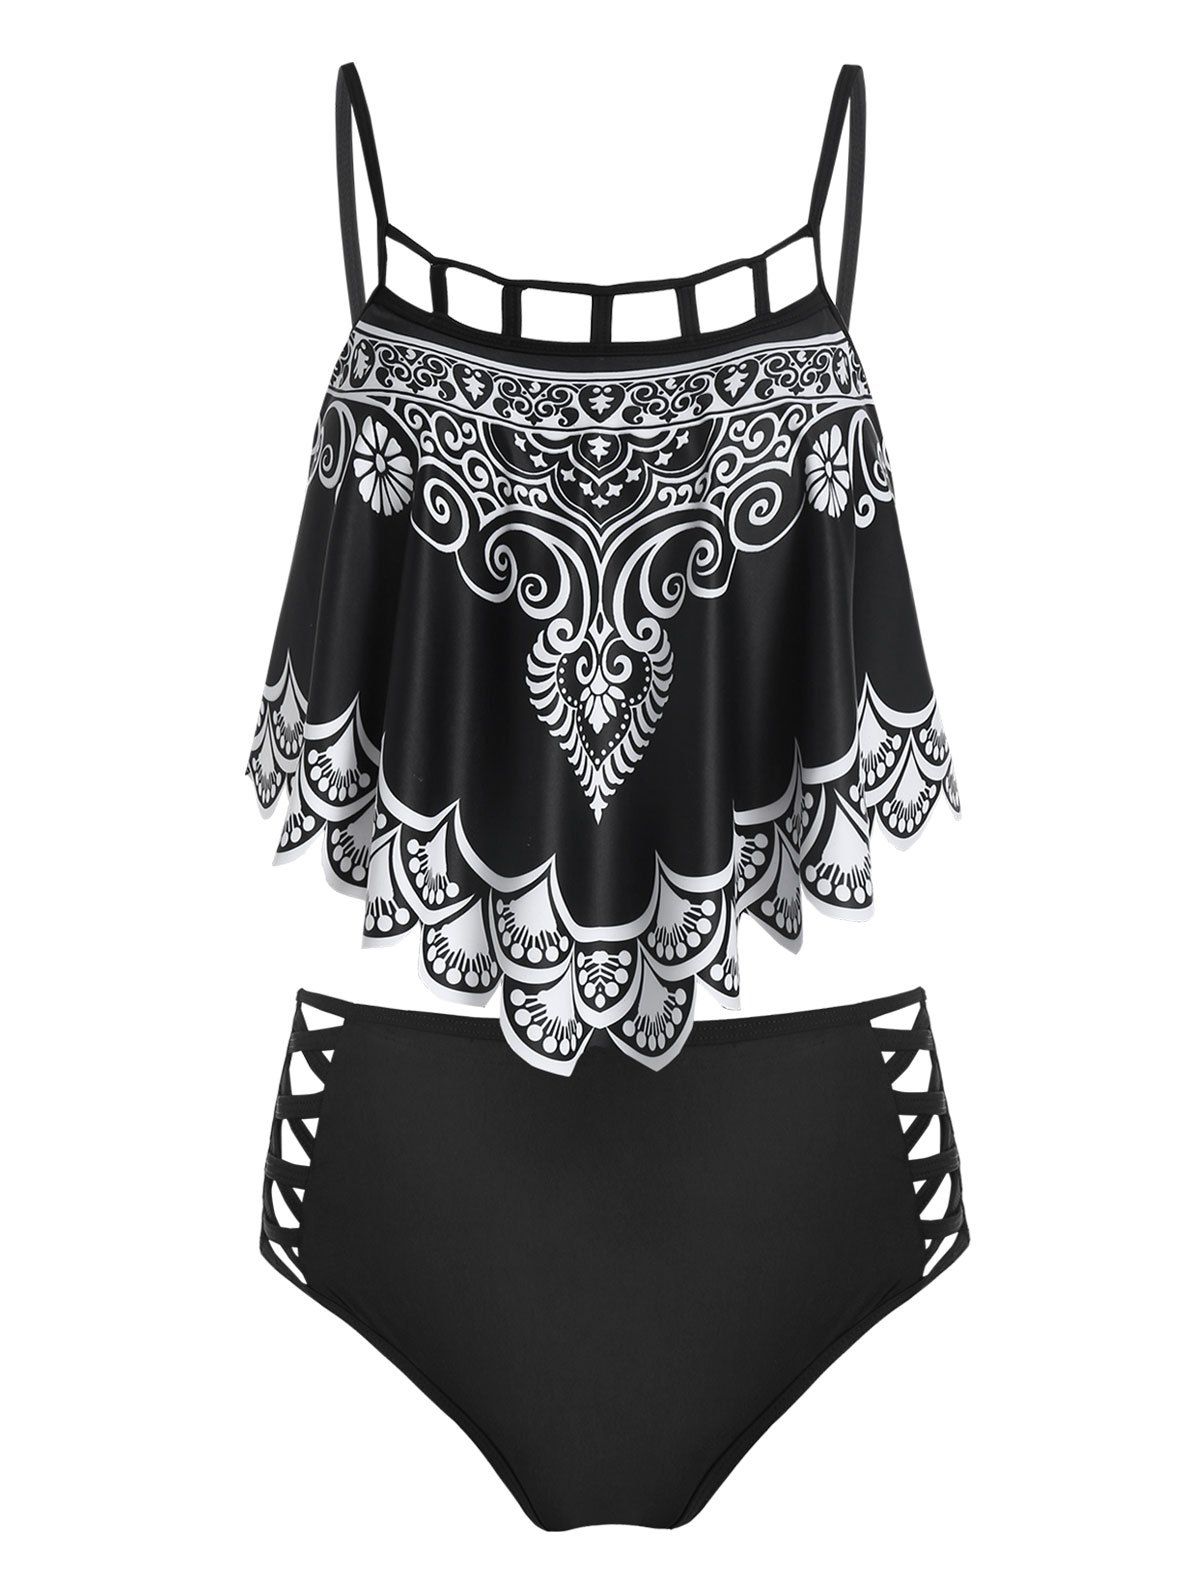 Ethnic Style Swimsuit Bohemian Bathing Suit Tribal Print Crisscross Tummy Control Tankini Swimwear - BLACK 3XL